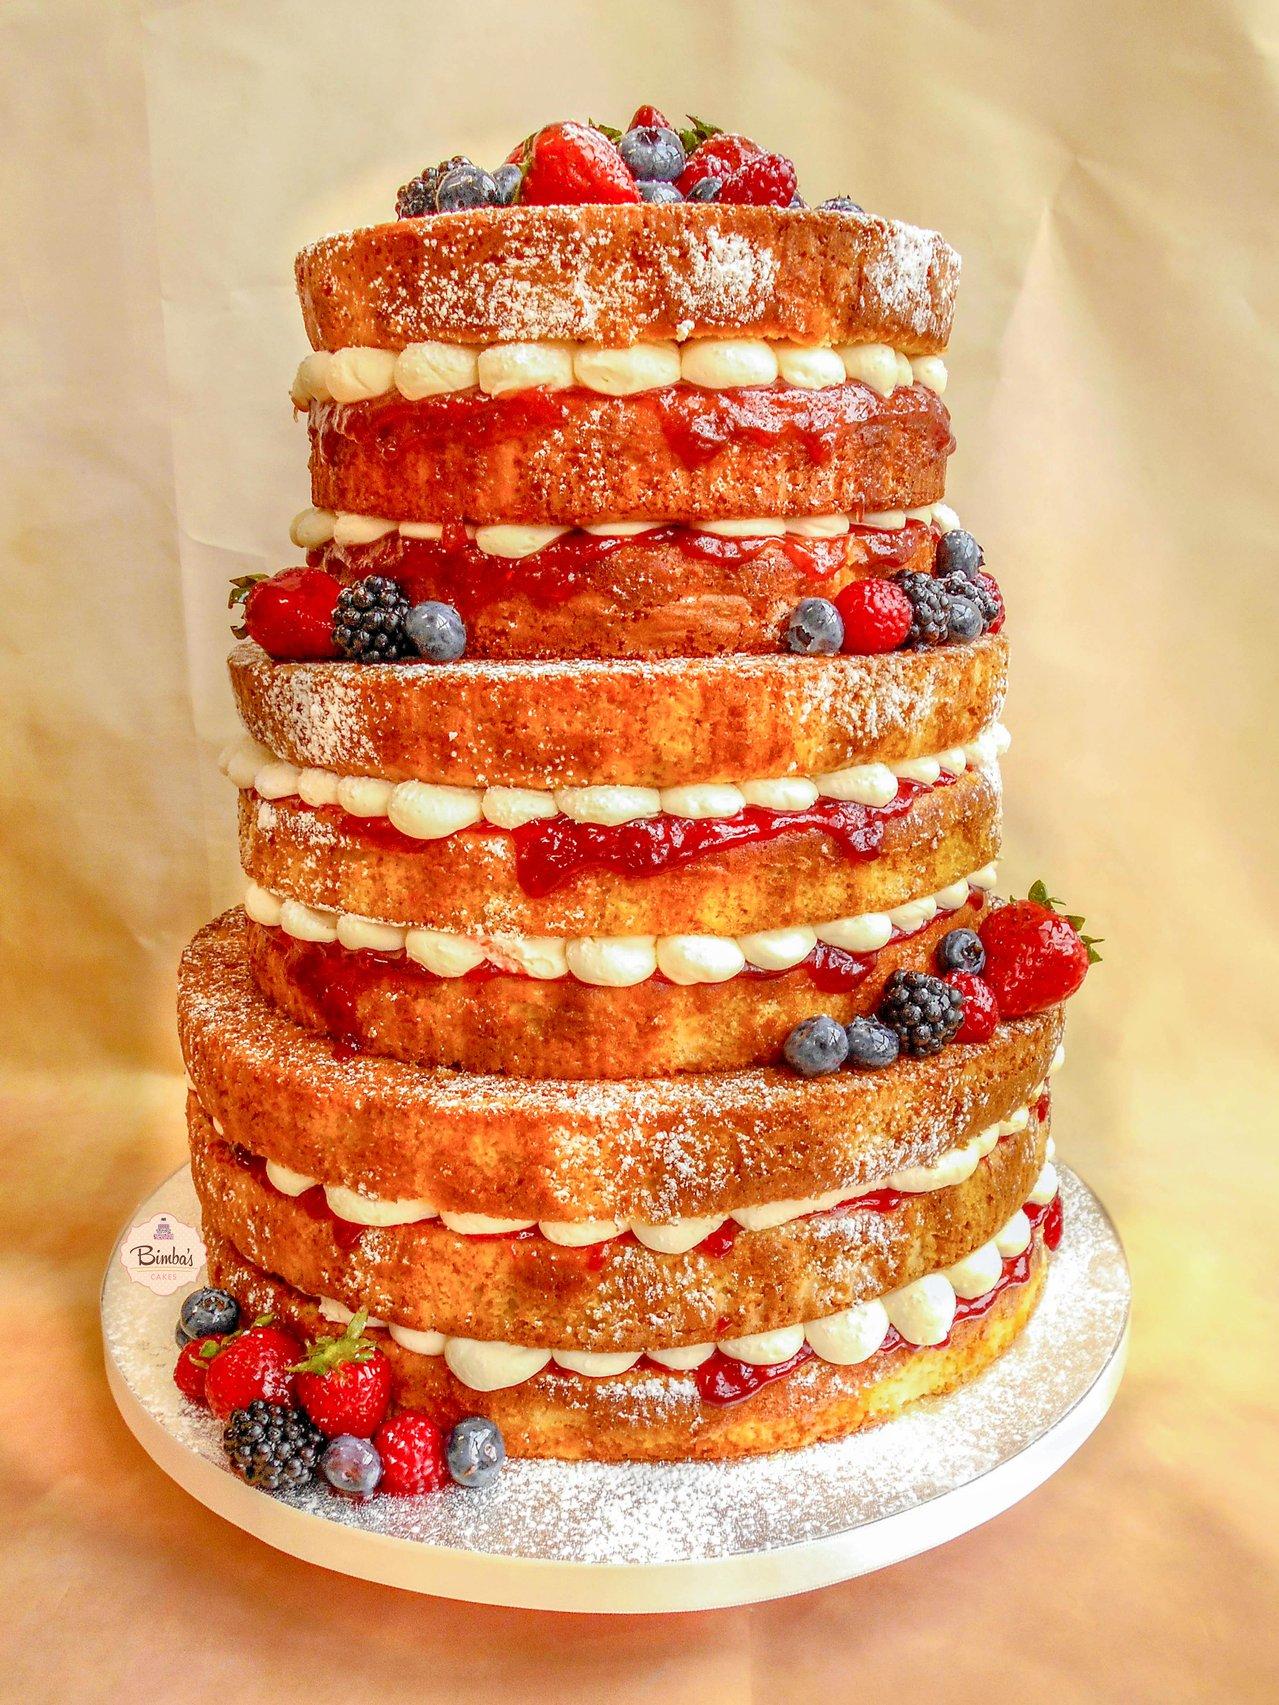 Tarta naked cake con nata y frutos rojos